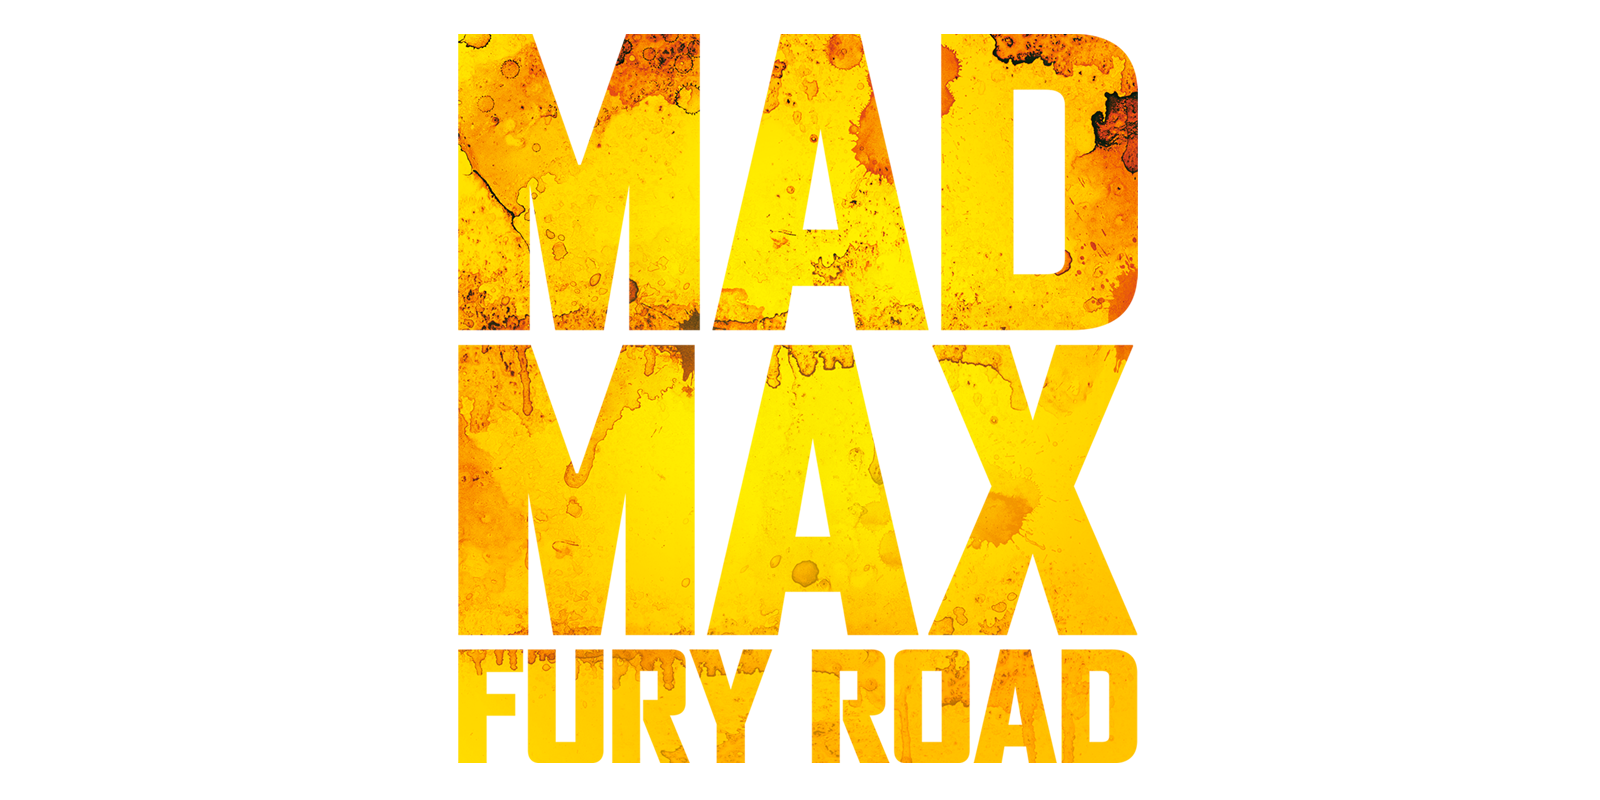 mad max fury road free online streaming 2015 megashare